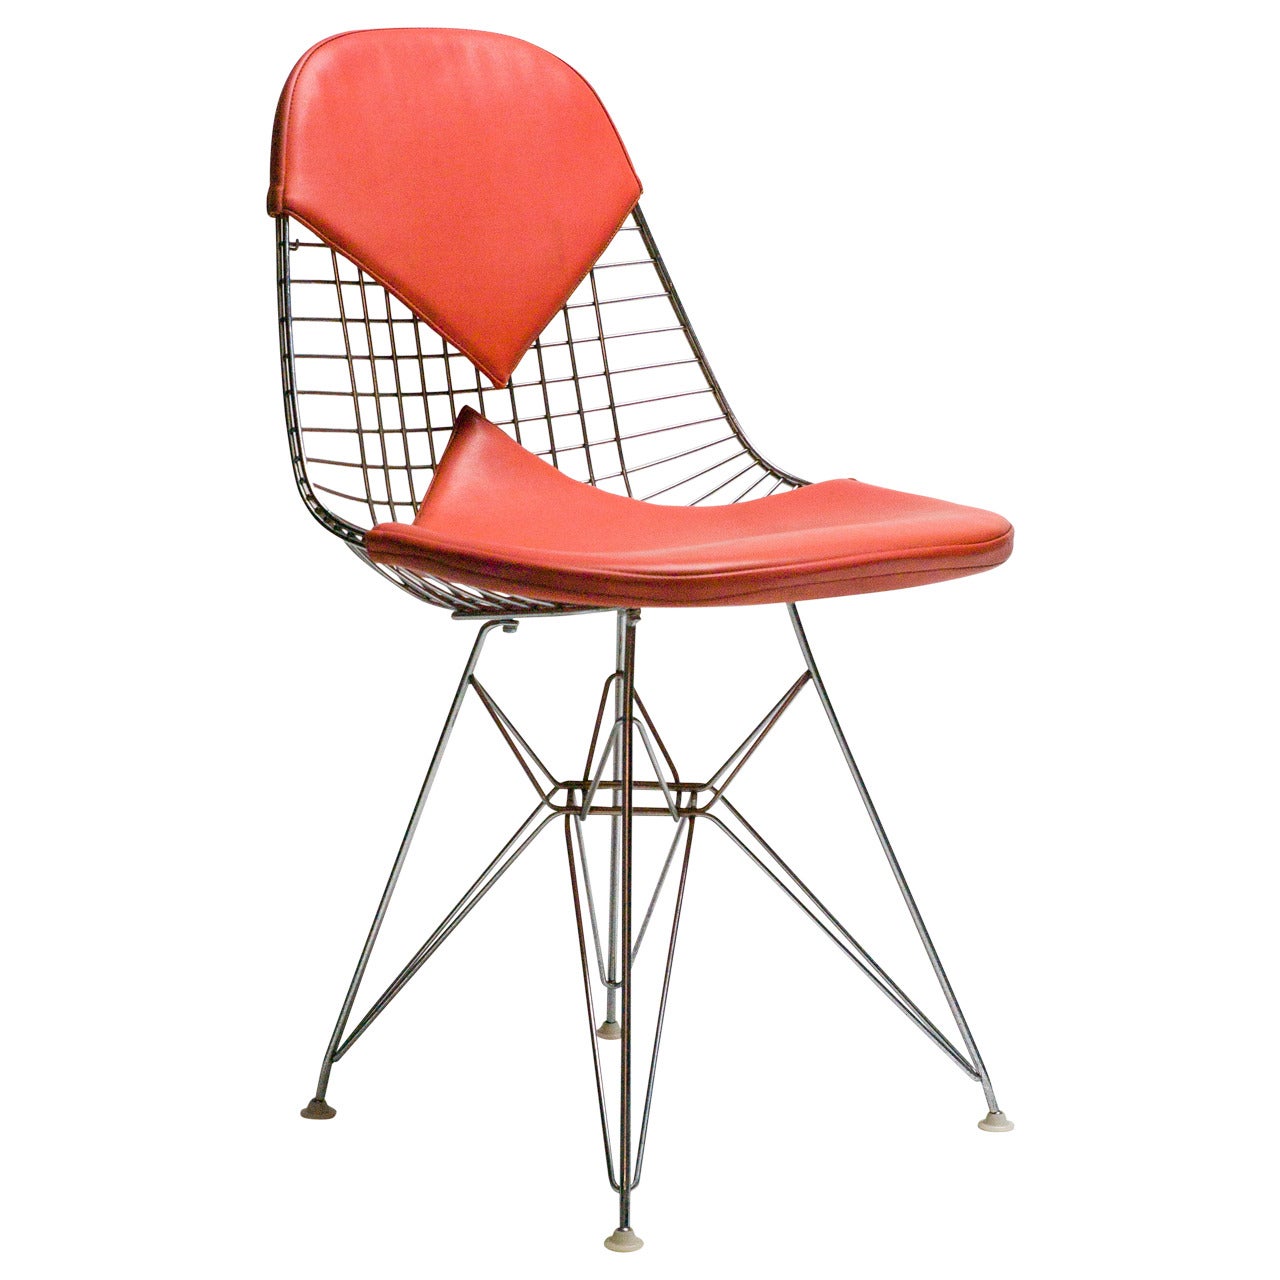 Charles Eames for Herman Miller DKR wire chair with original Naugahyde bikini.